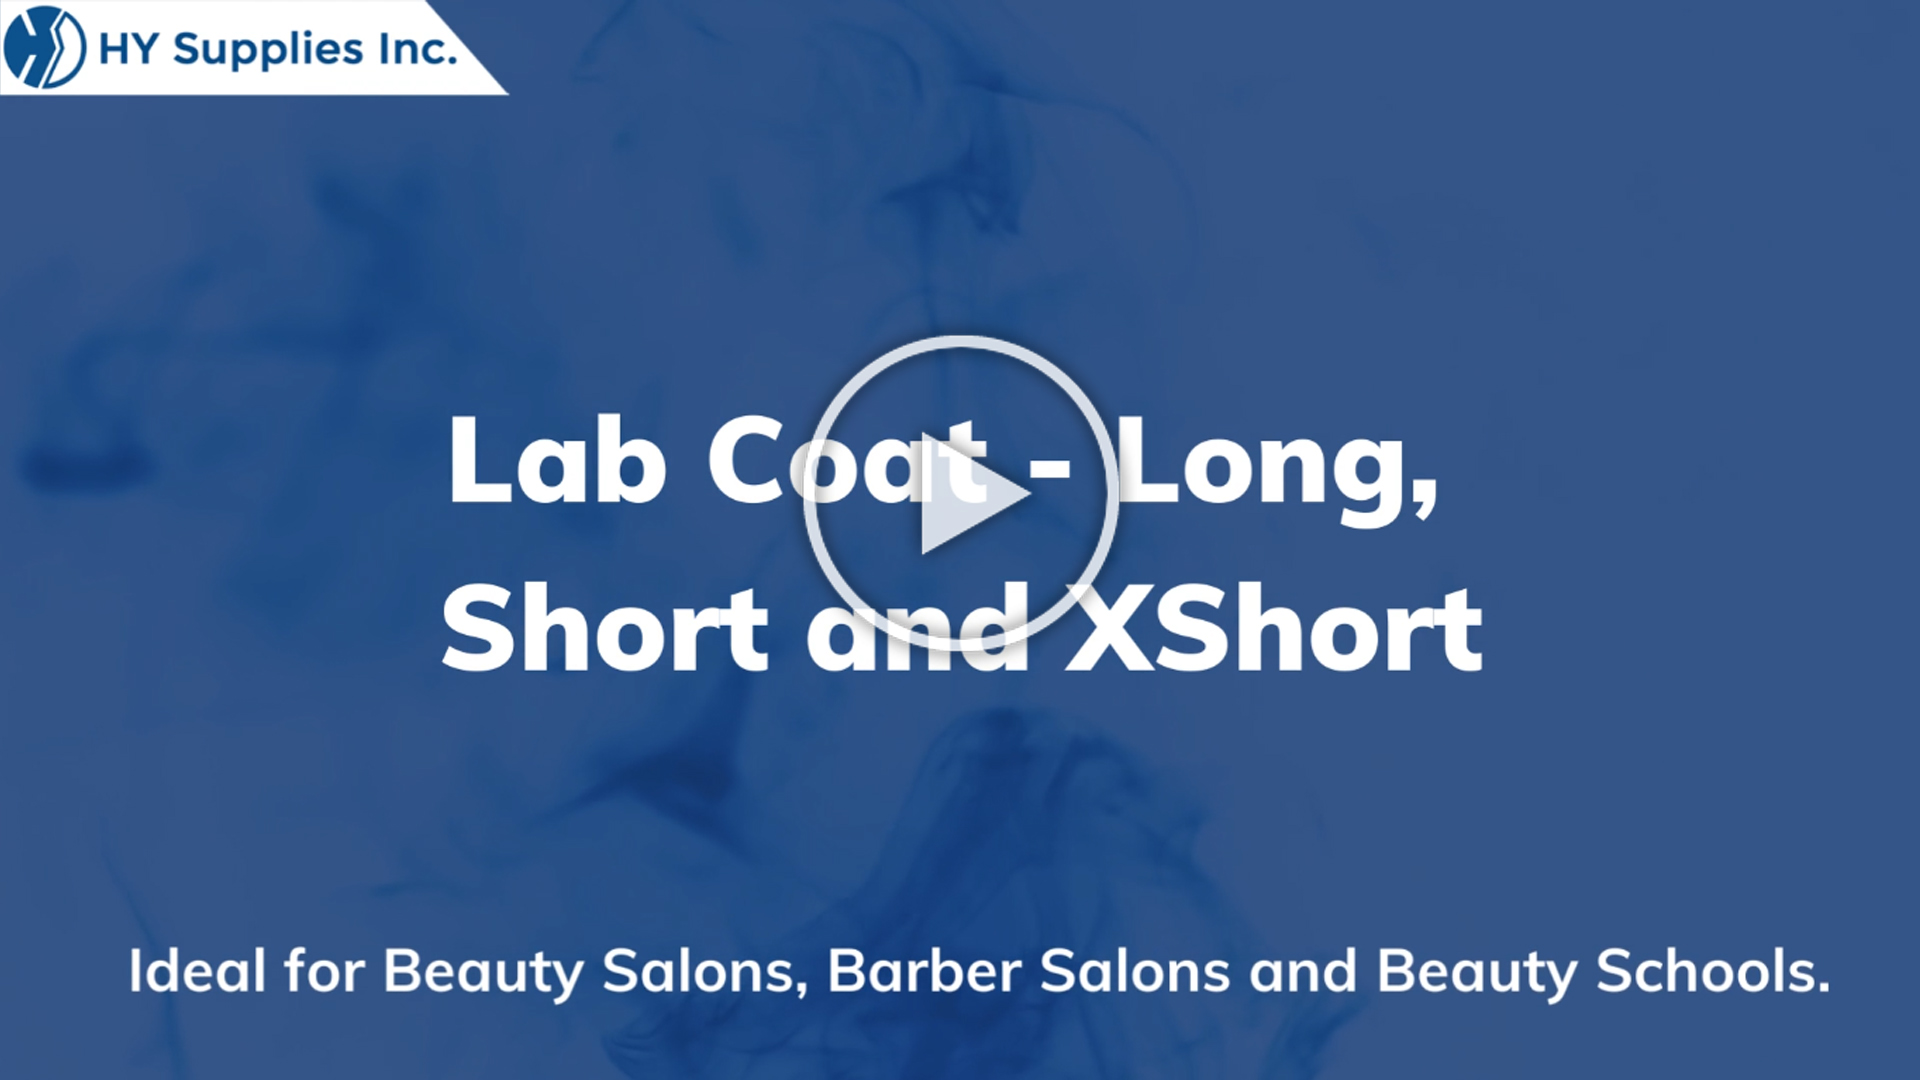 Lab Coat - Long, Short and XShort